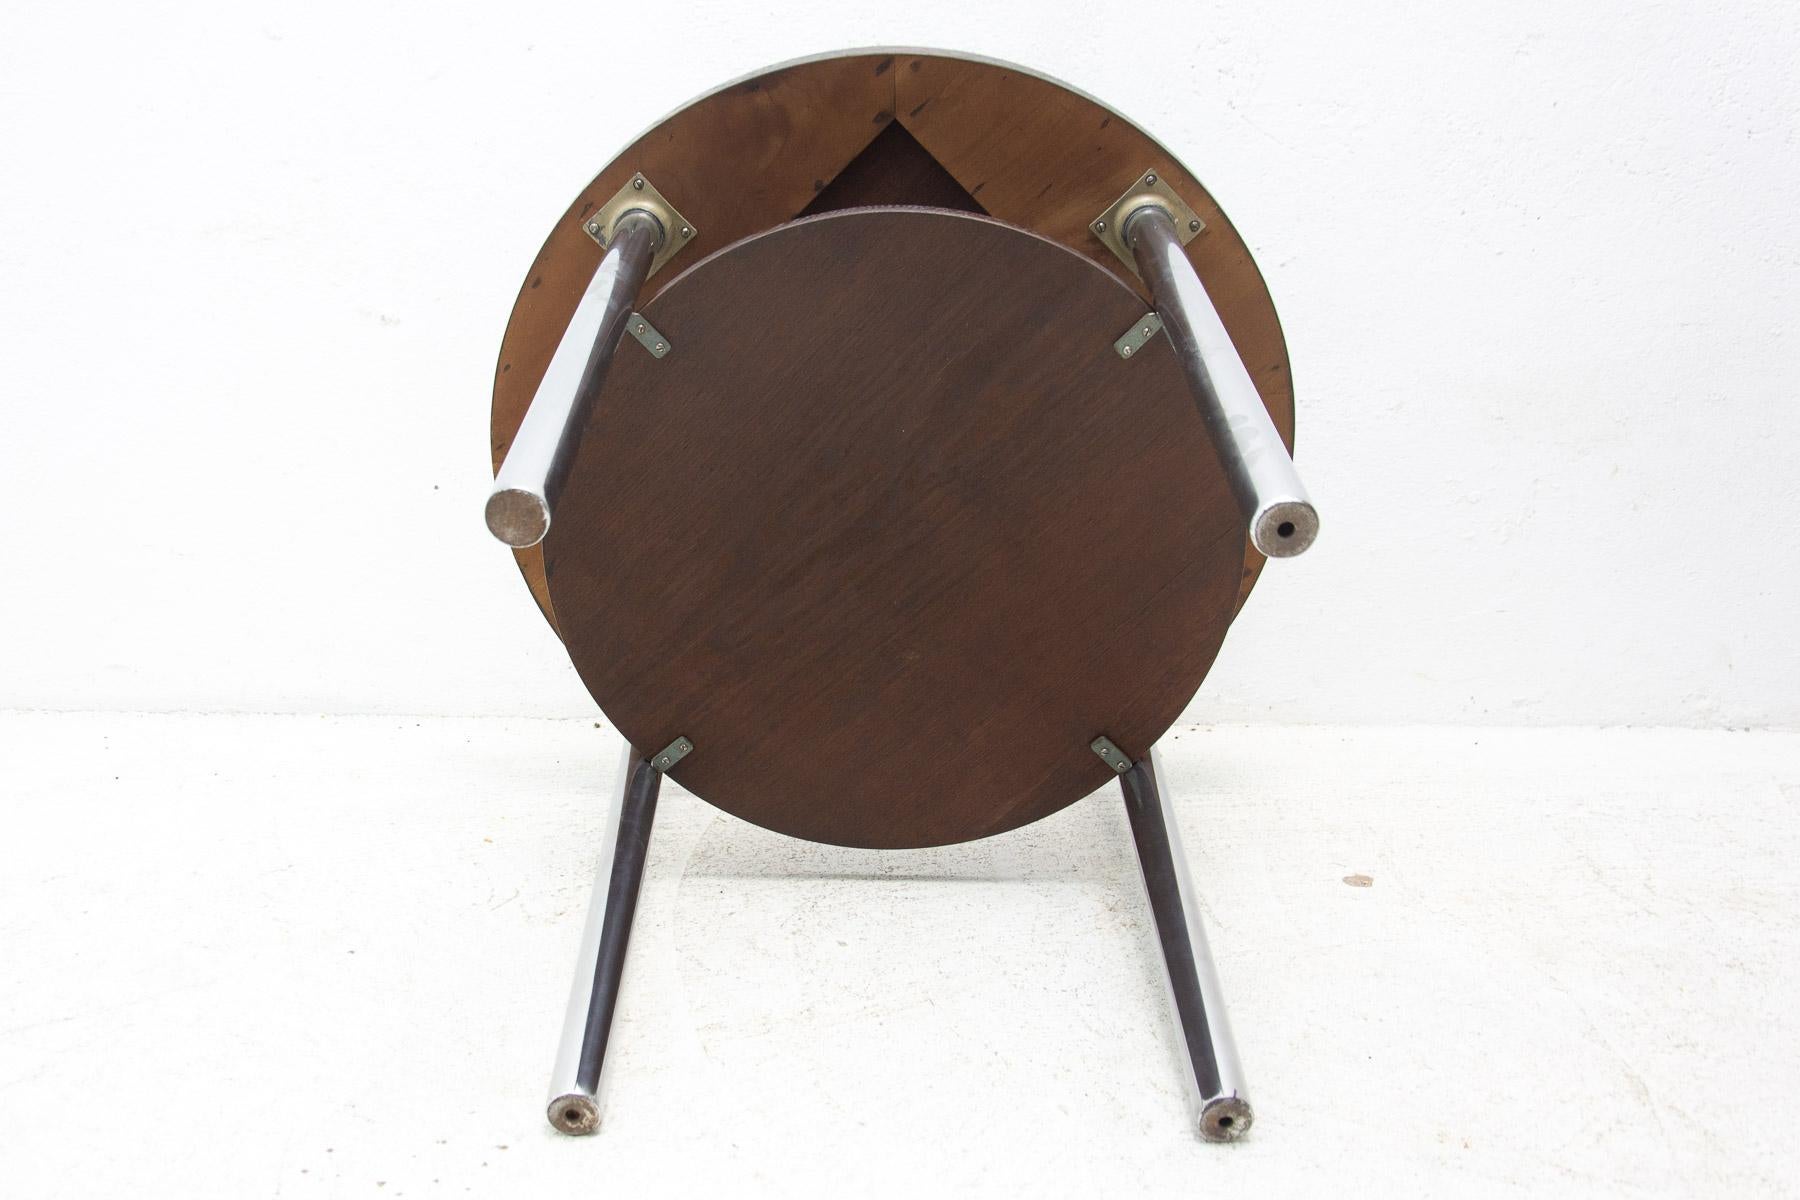 Bauhaus Chromed Coffee Table by Robert Slezak, 1930s For Sale 3